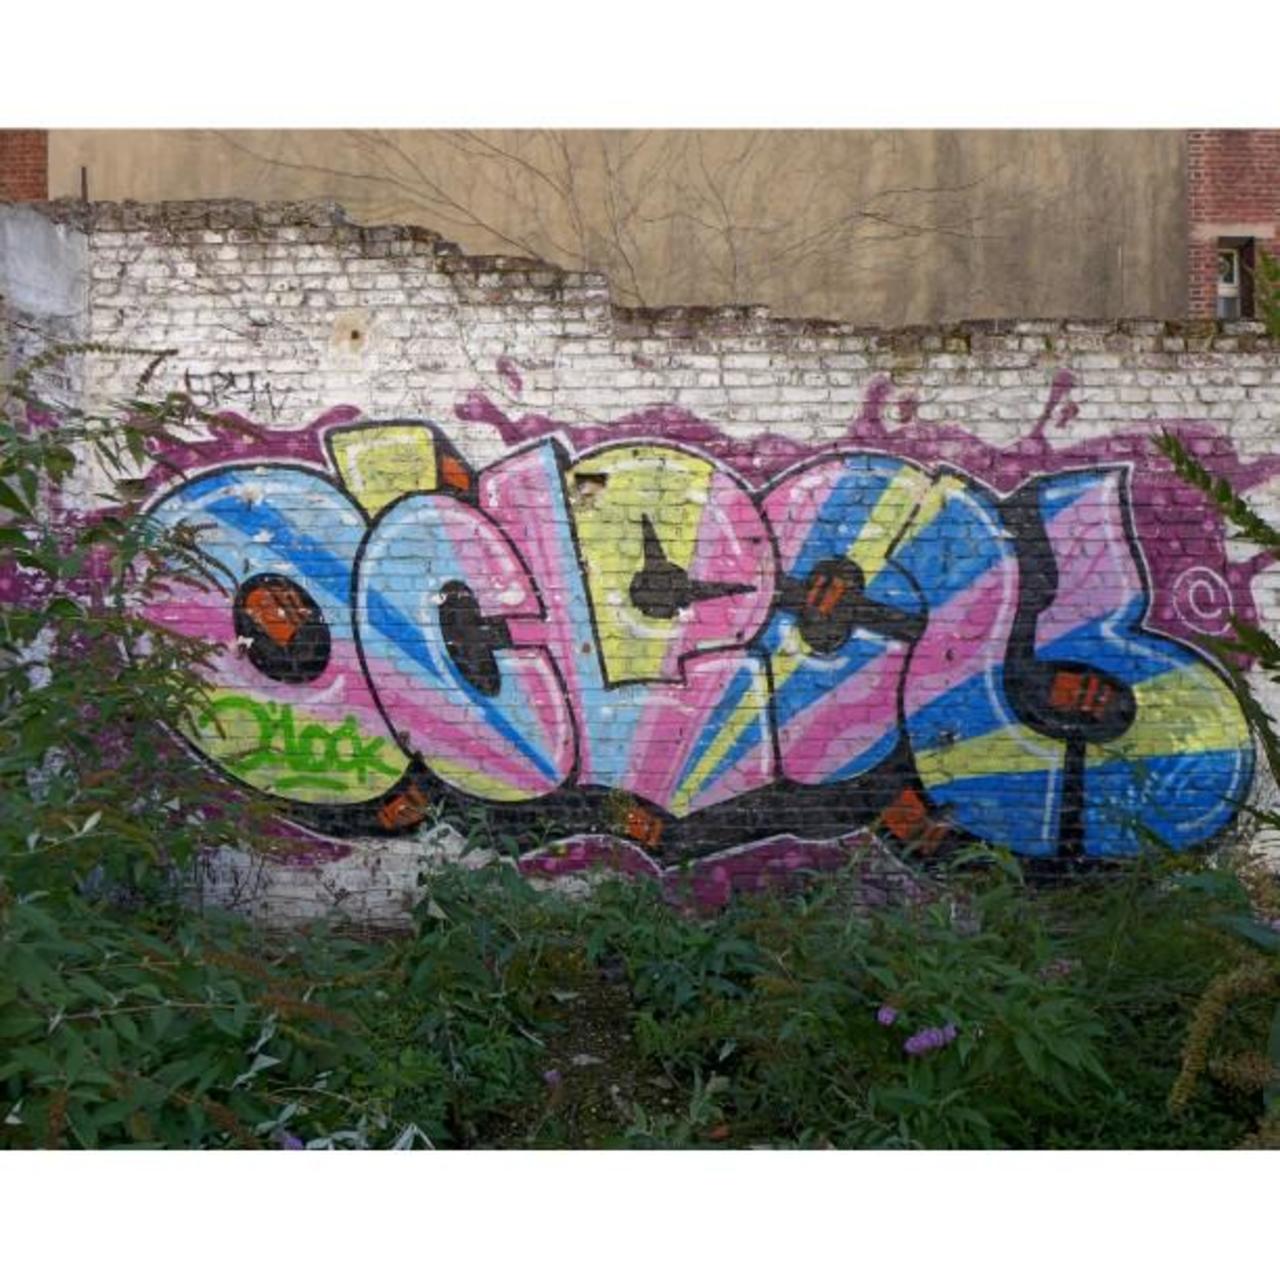 circumjacent_fr: #Paris #graffiti photo by maxdimontemarciano http://ift.tt/1LVxwMx #StreetArt http://t.co/hNqhM3HTMV